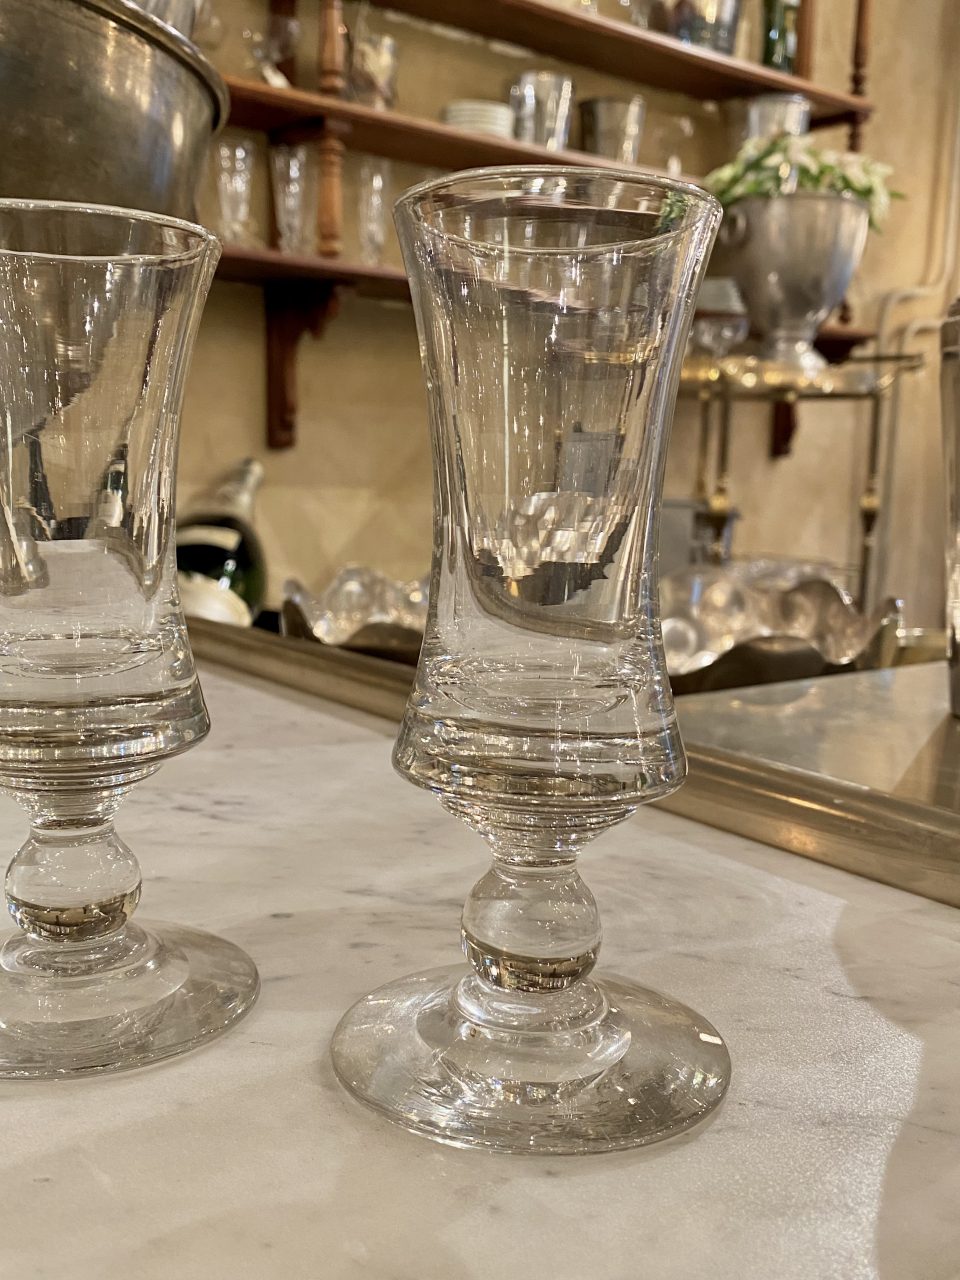 Aperitifglas/Kir royal glas - De Fer